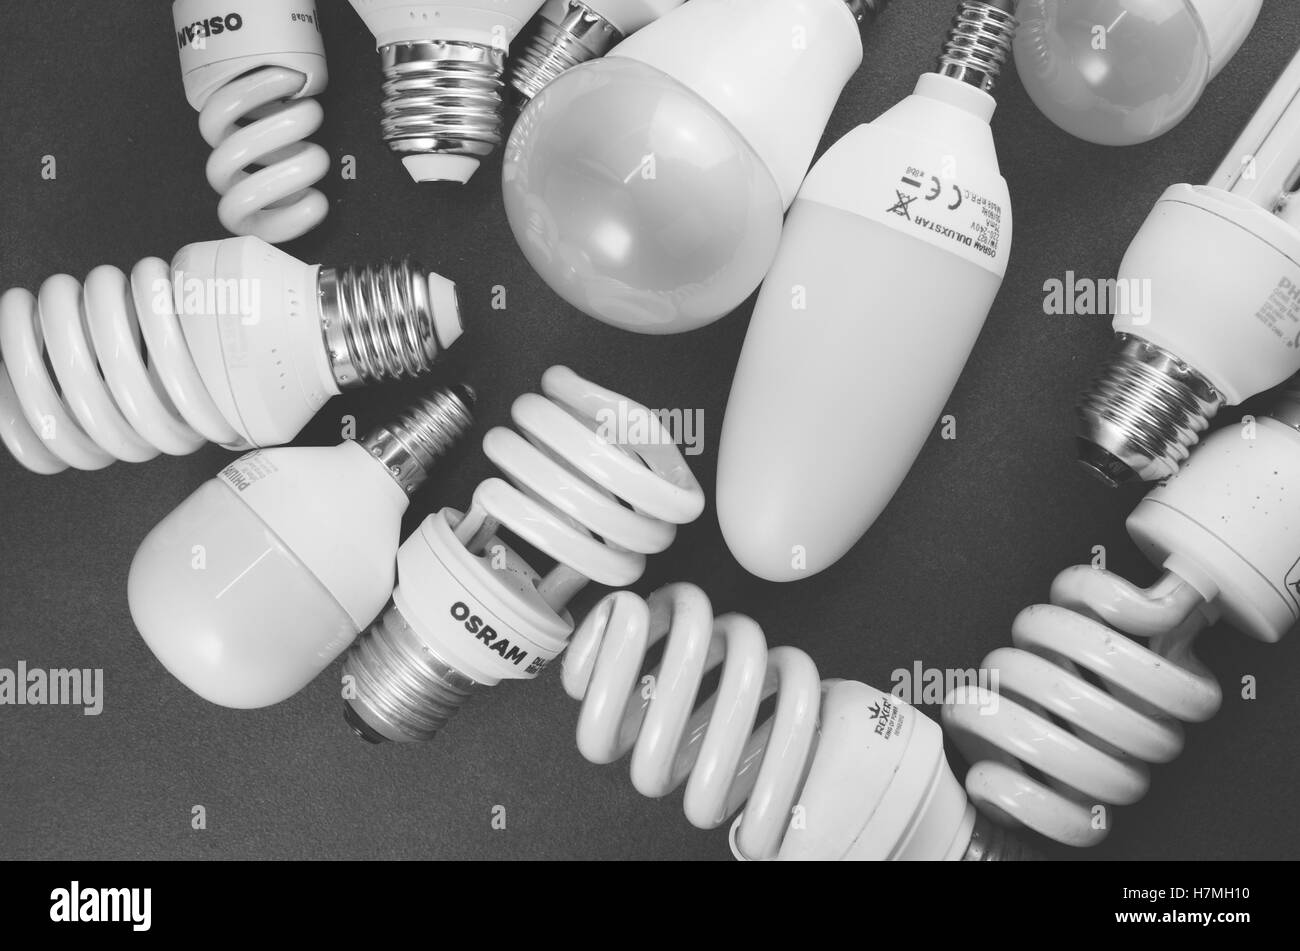 mixed low power fluorescent light bulbs on a dark surface - energy saving Stock Photo